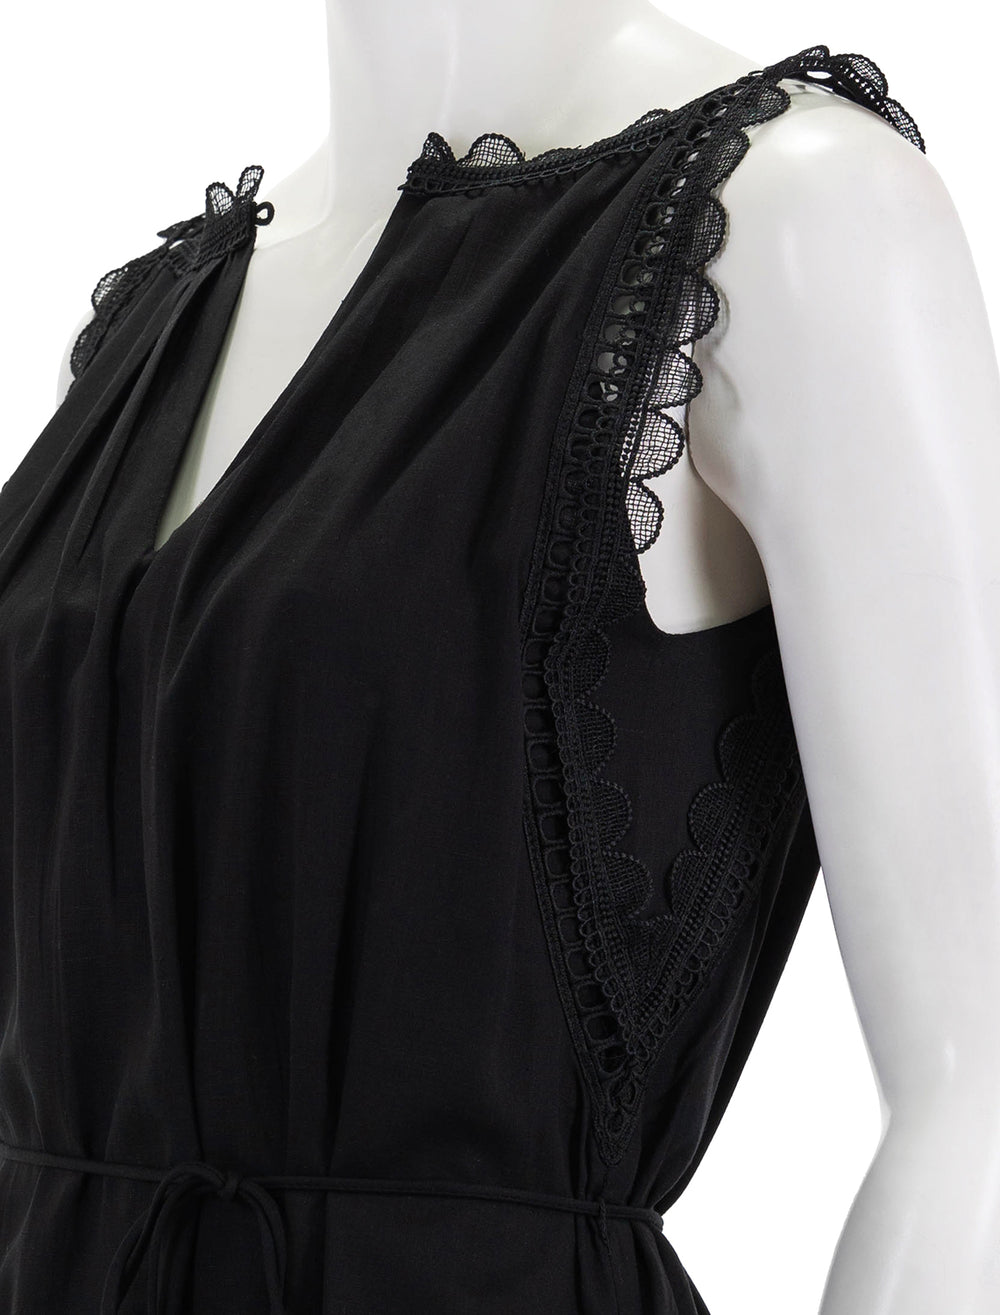 Close-up view of Suncoo Paris' Cristy V-Neck Dress in Noir.